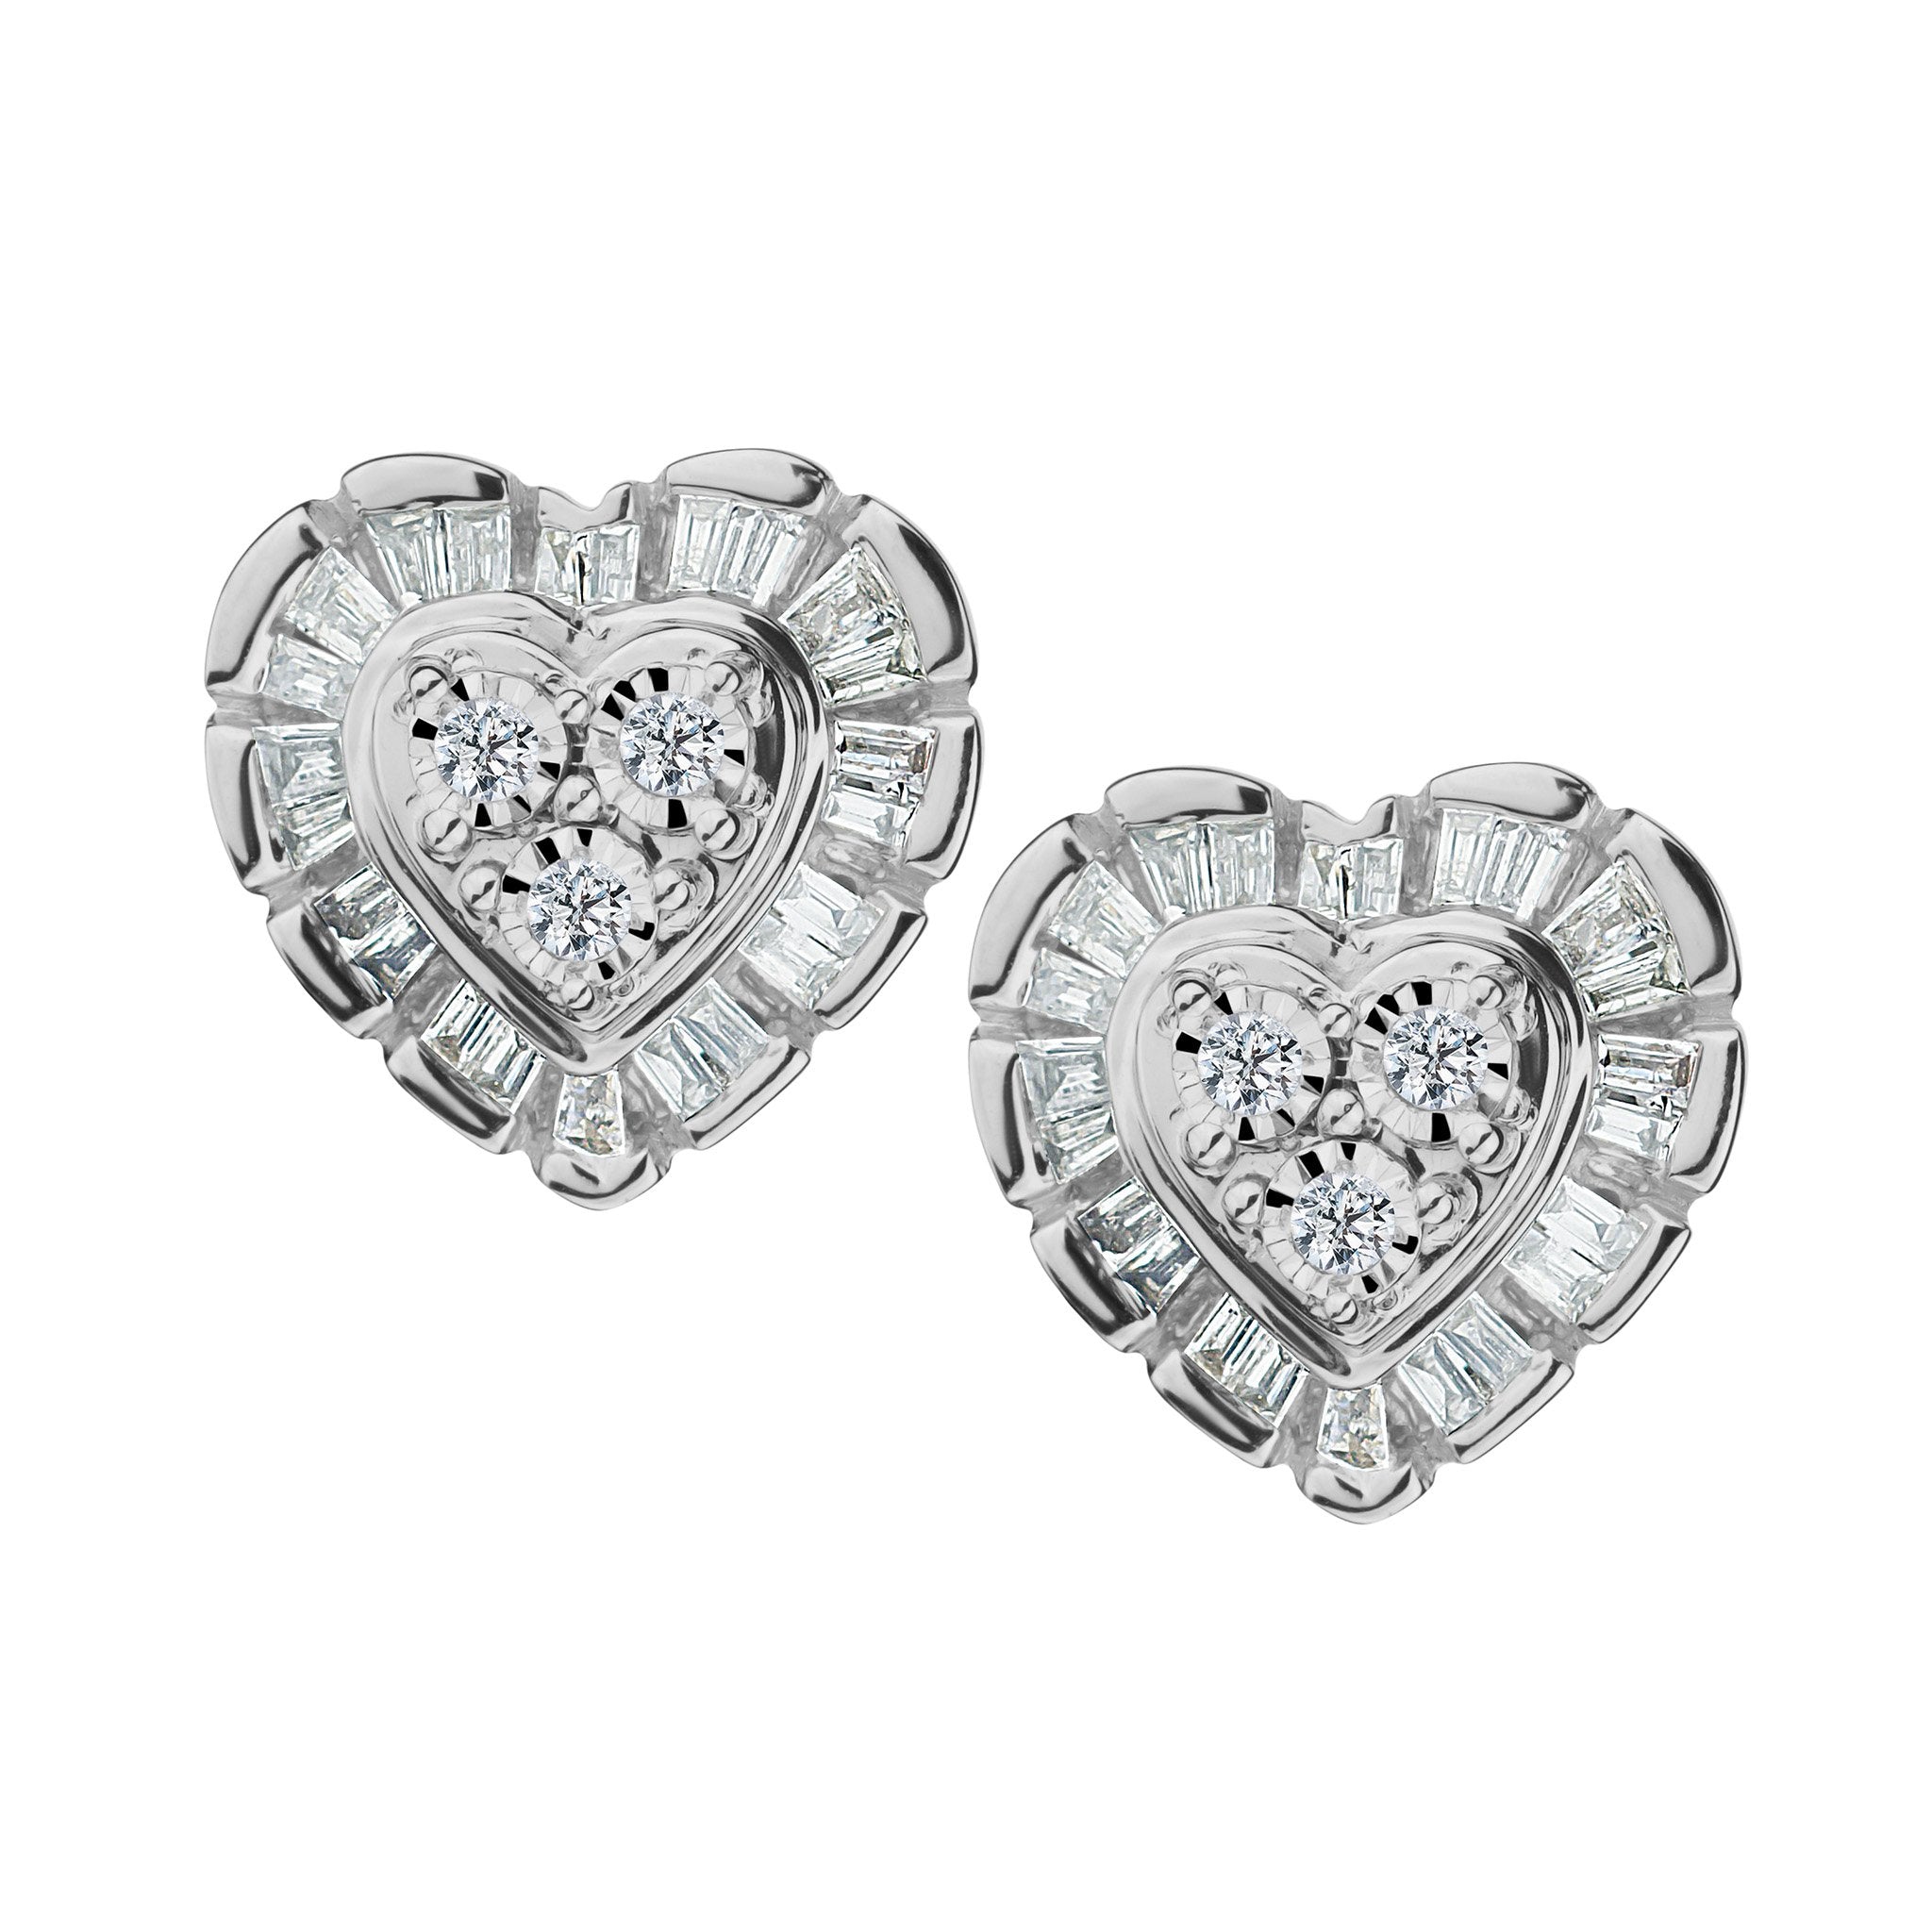 .20 Carat of Diamonds Heart Earrings, 10kt White Gold….....................NOW